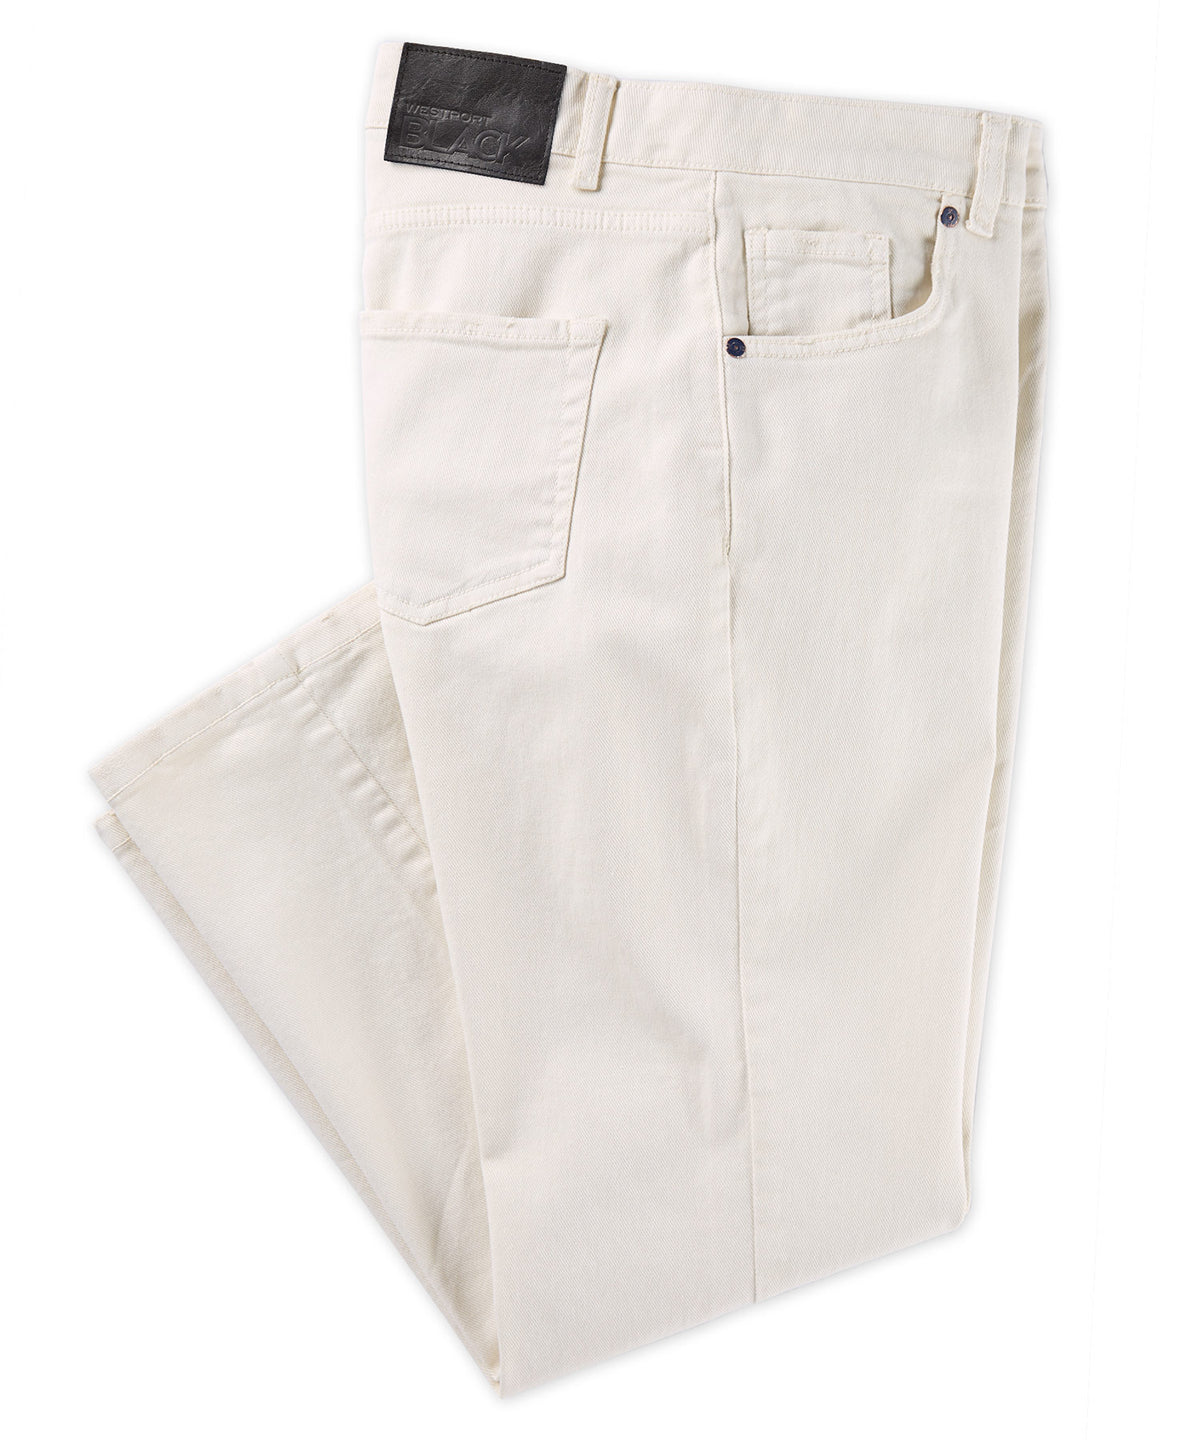 Westport Black Italian 5-Pocket Twill Jean